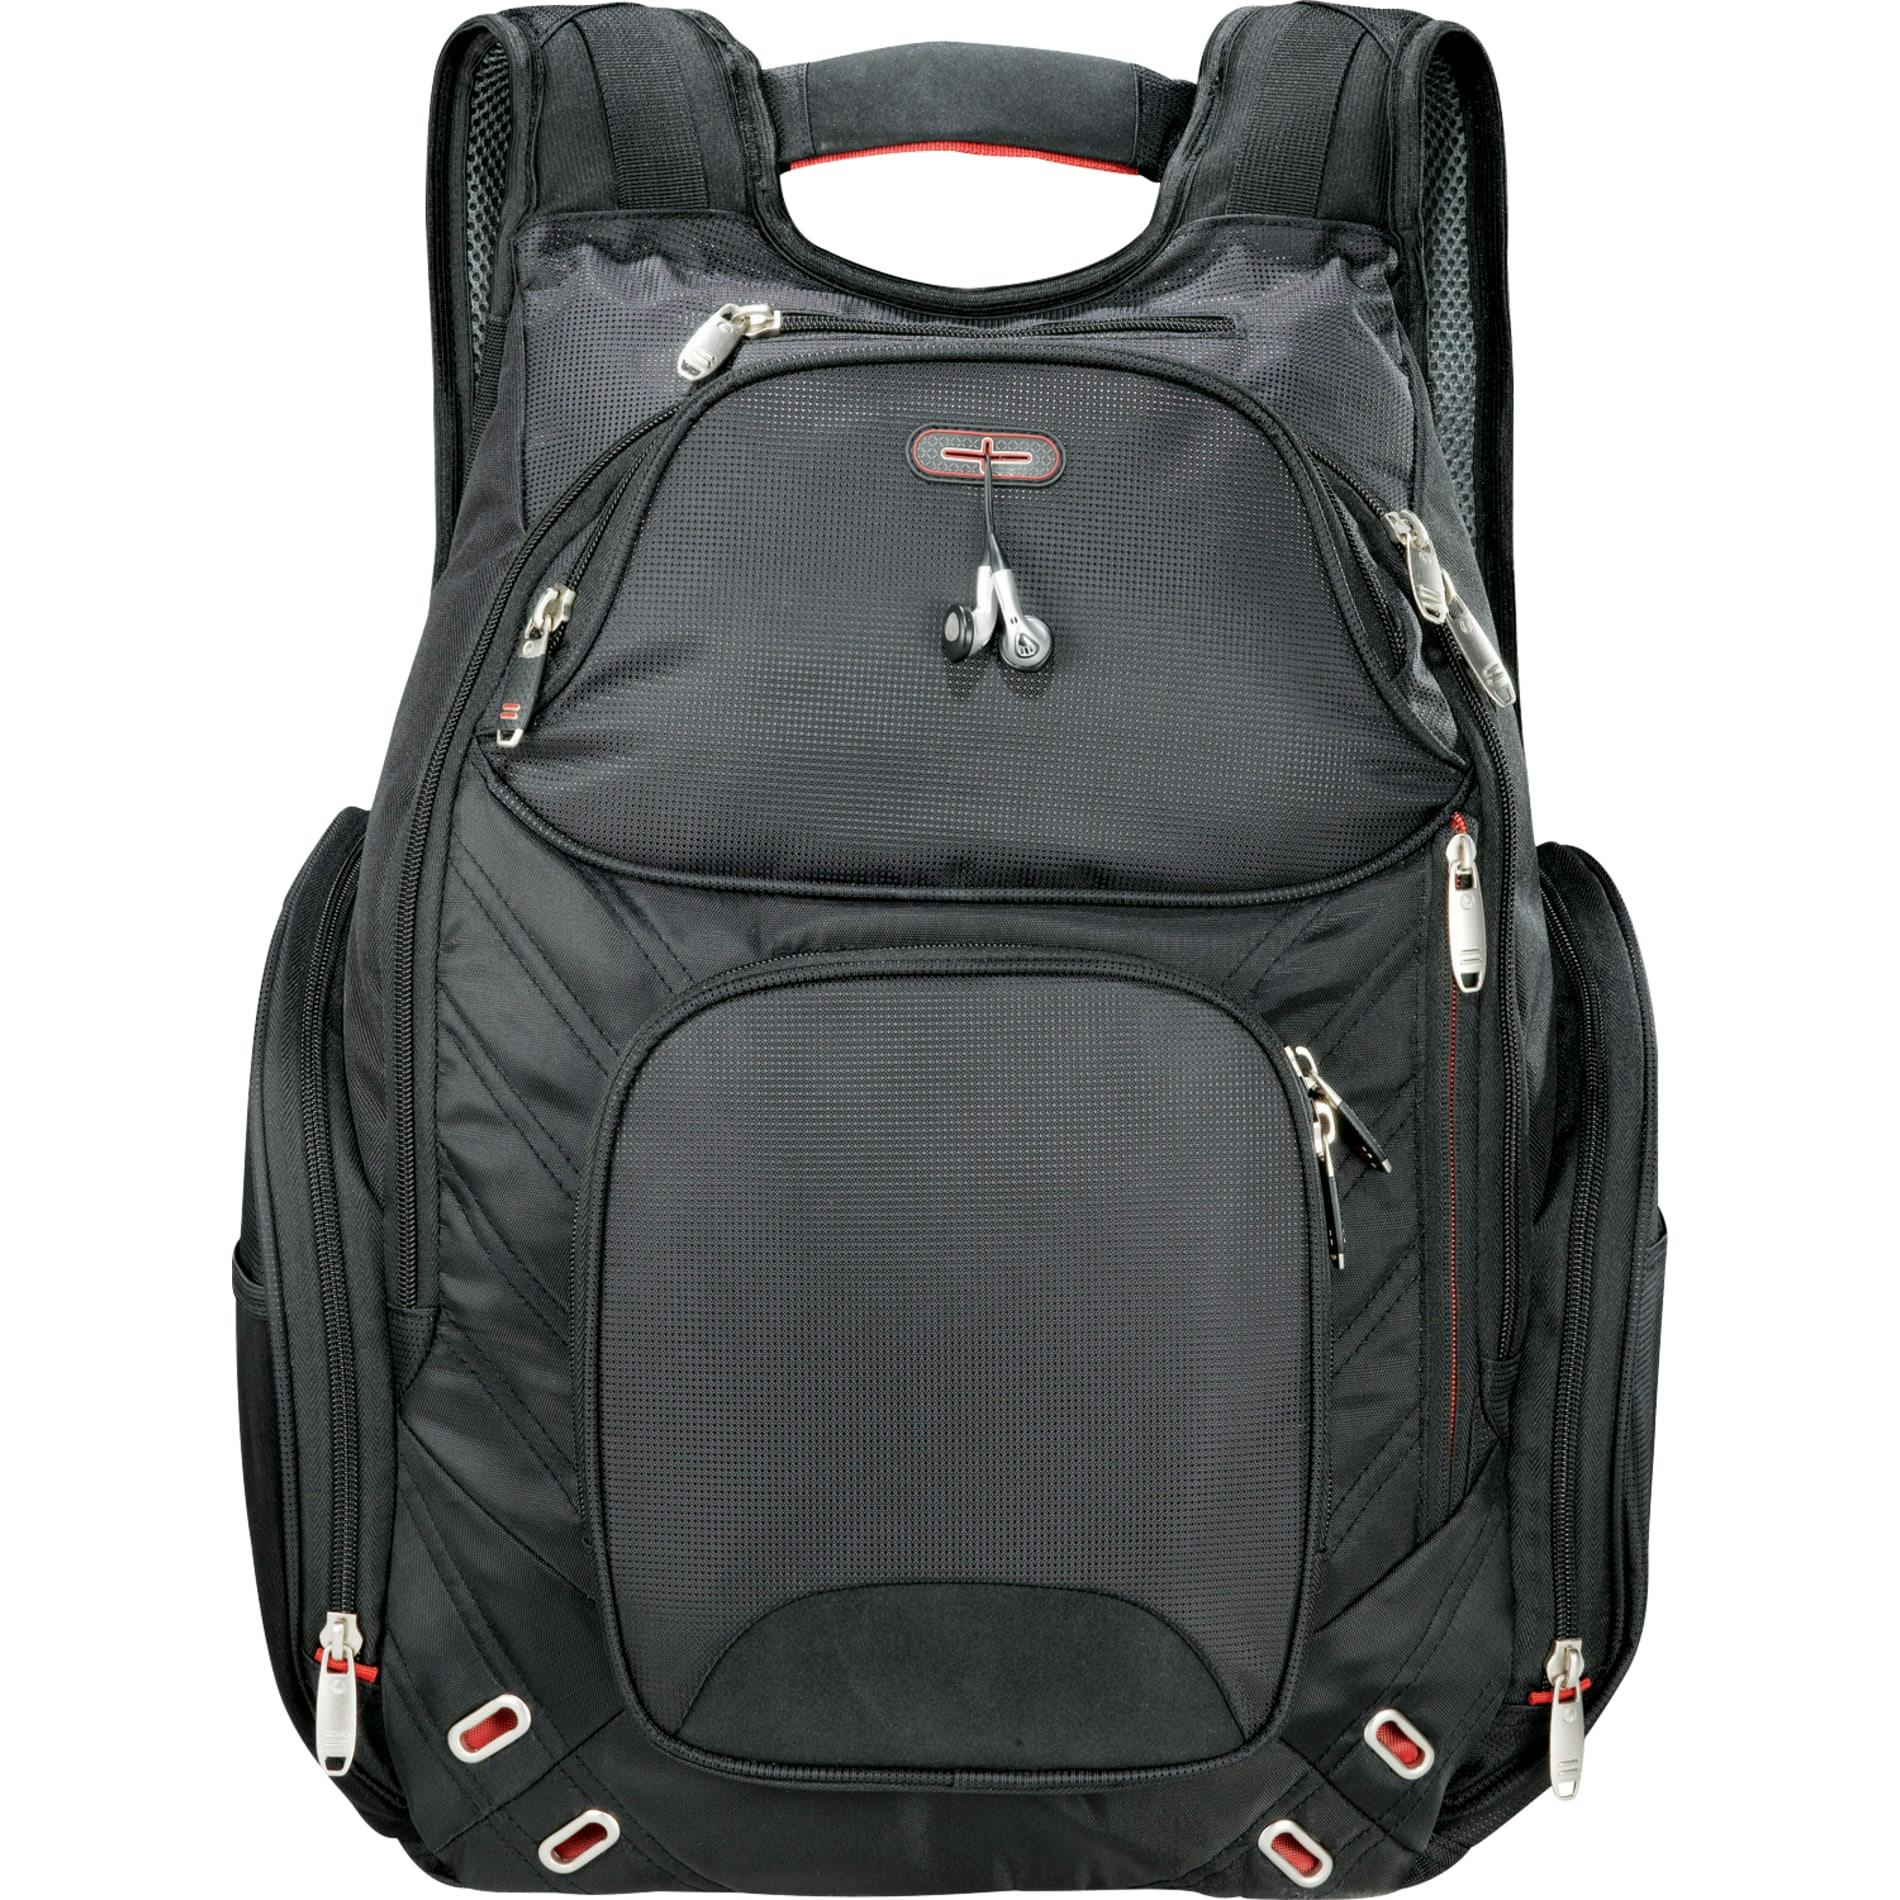 elleven™ Amped TSA 17" Computer Backpack - additional Image 8